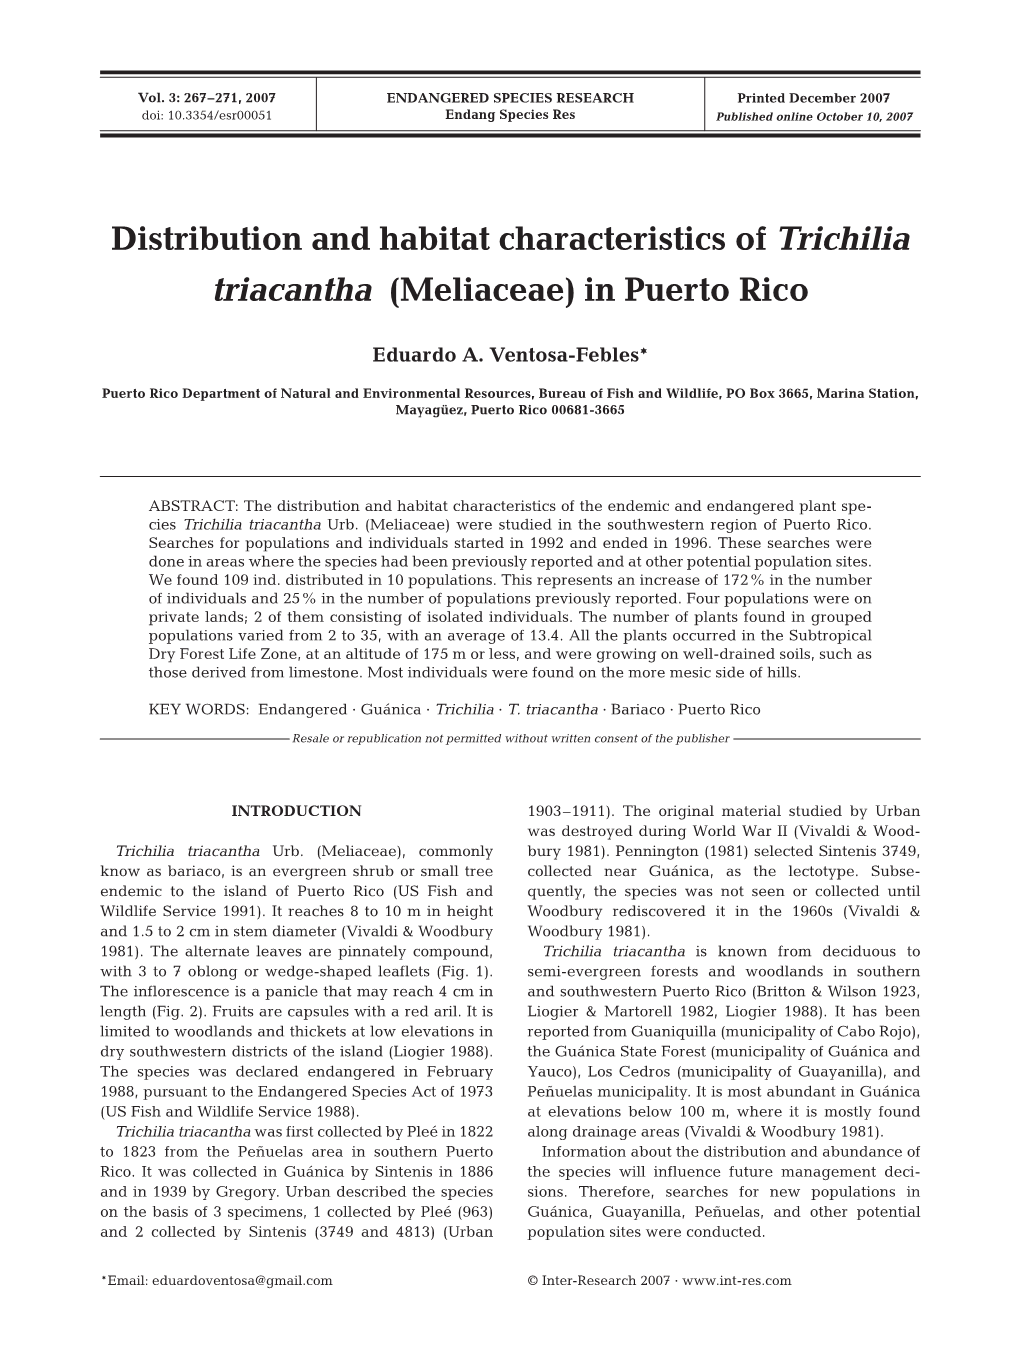 Distribution and Habitat Characteristics of Trichilia Triacantha (Meliaceae) in Puerto Rico